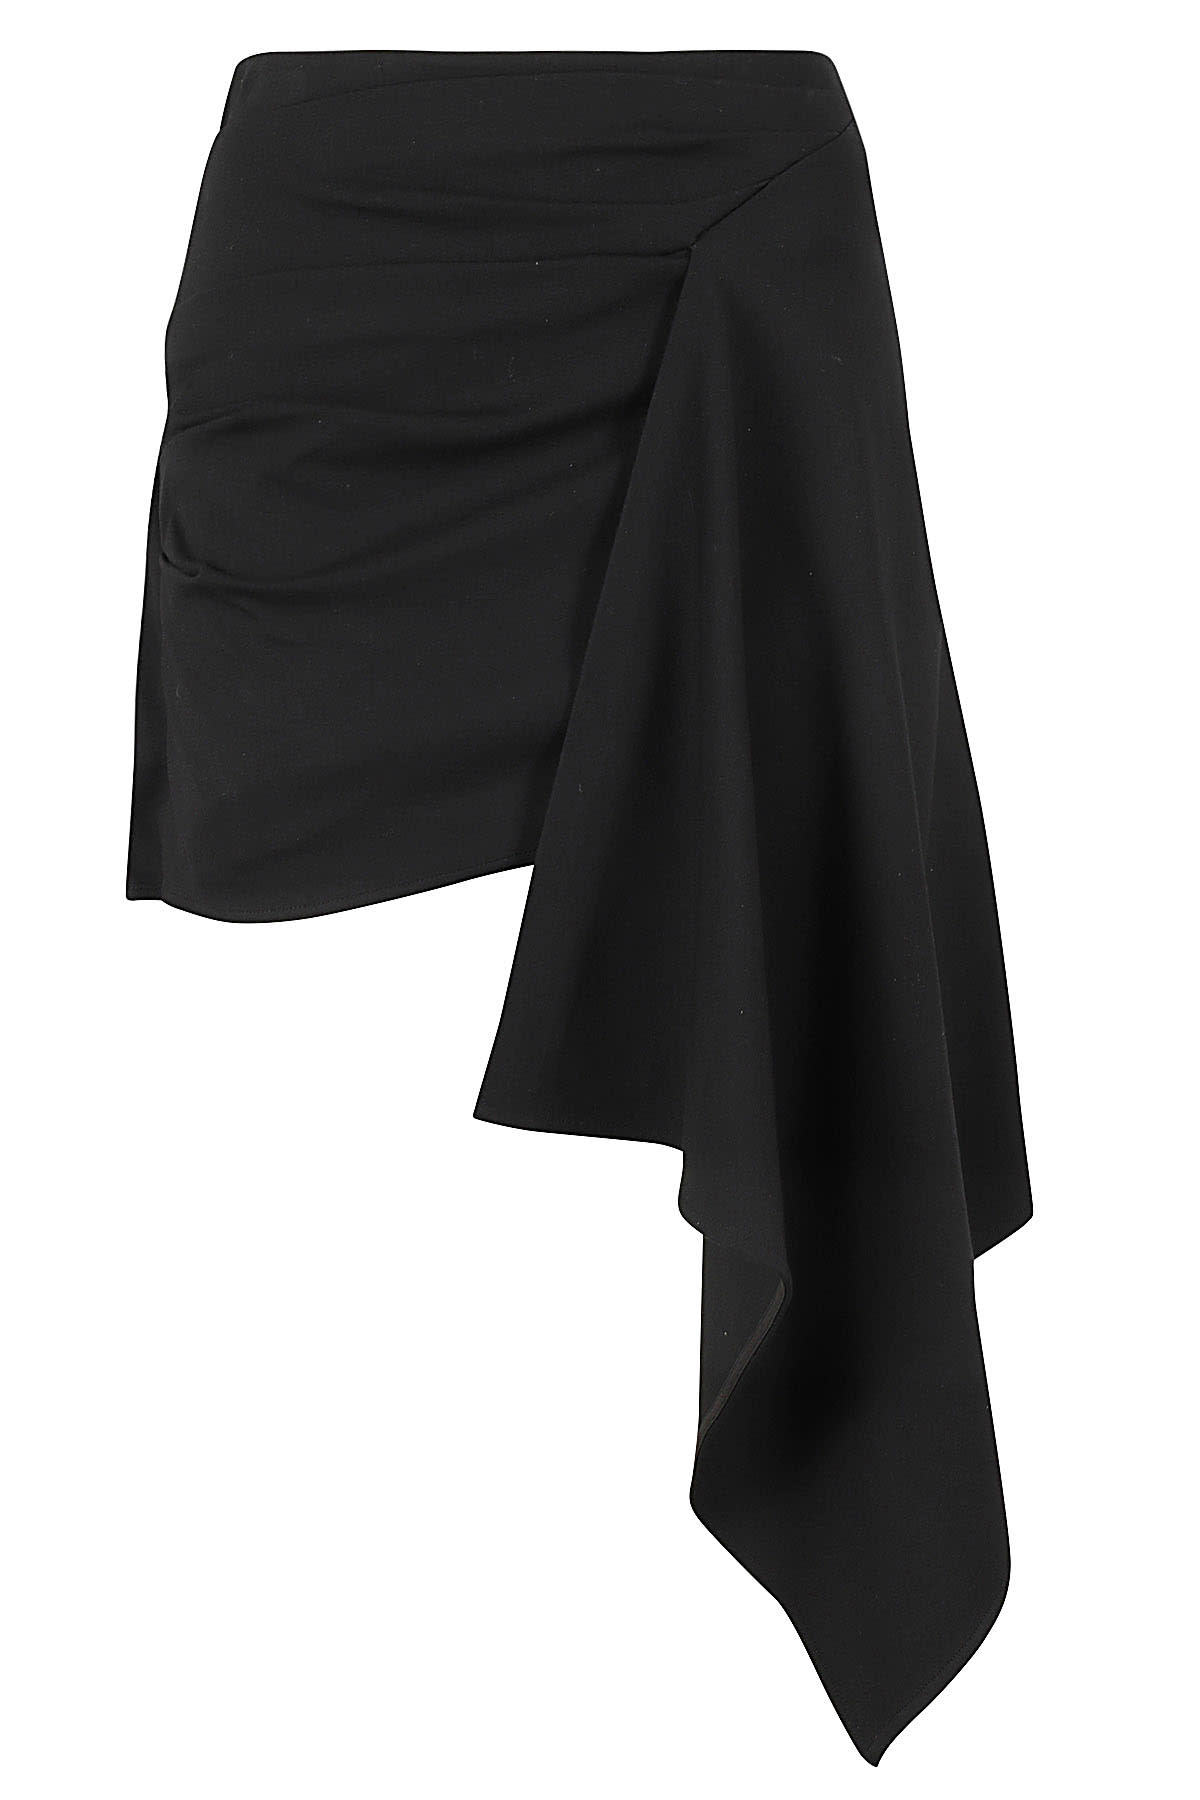 Rivera Skirt